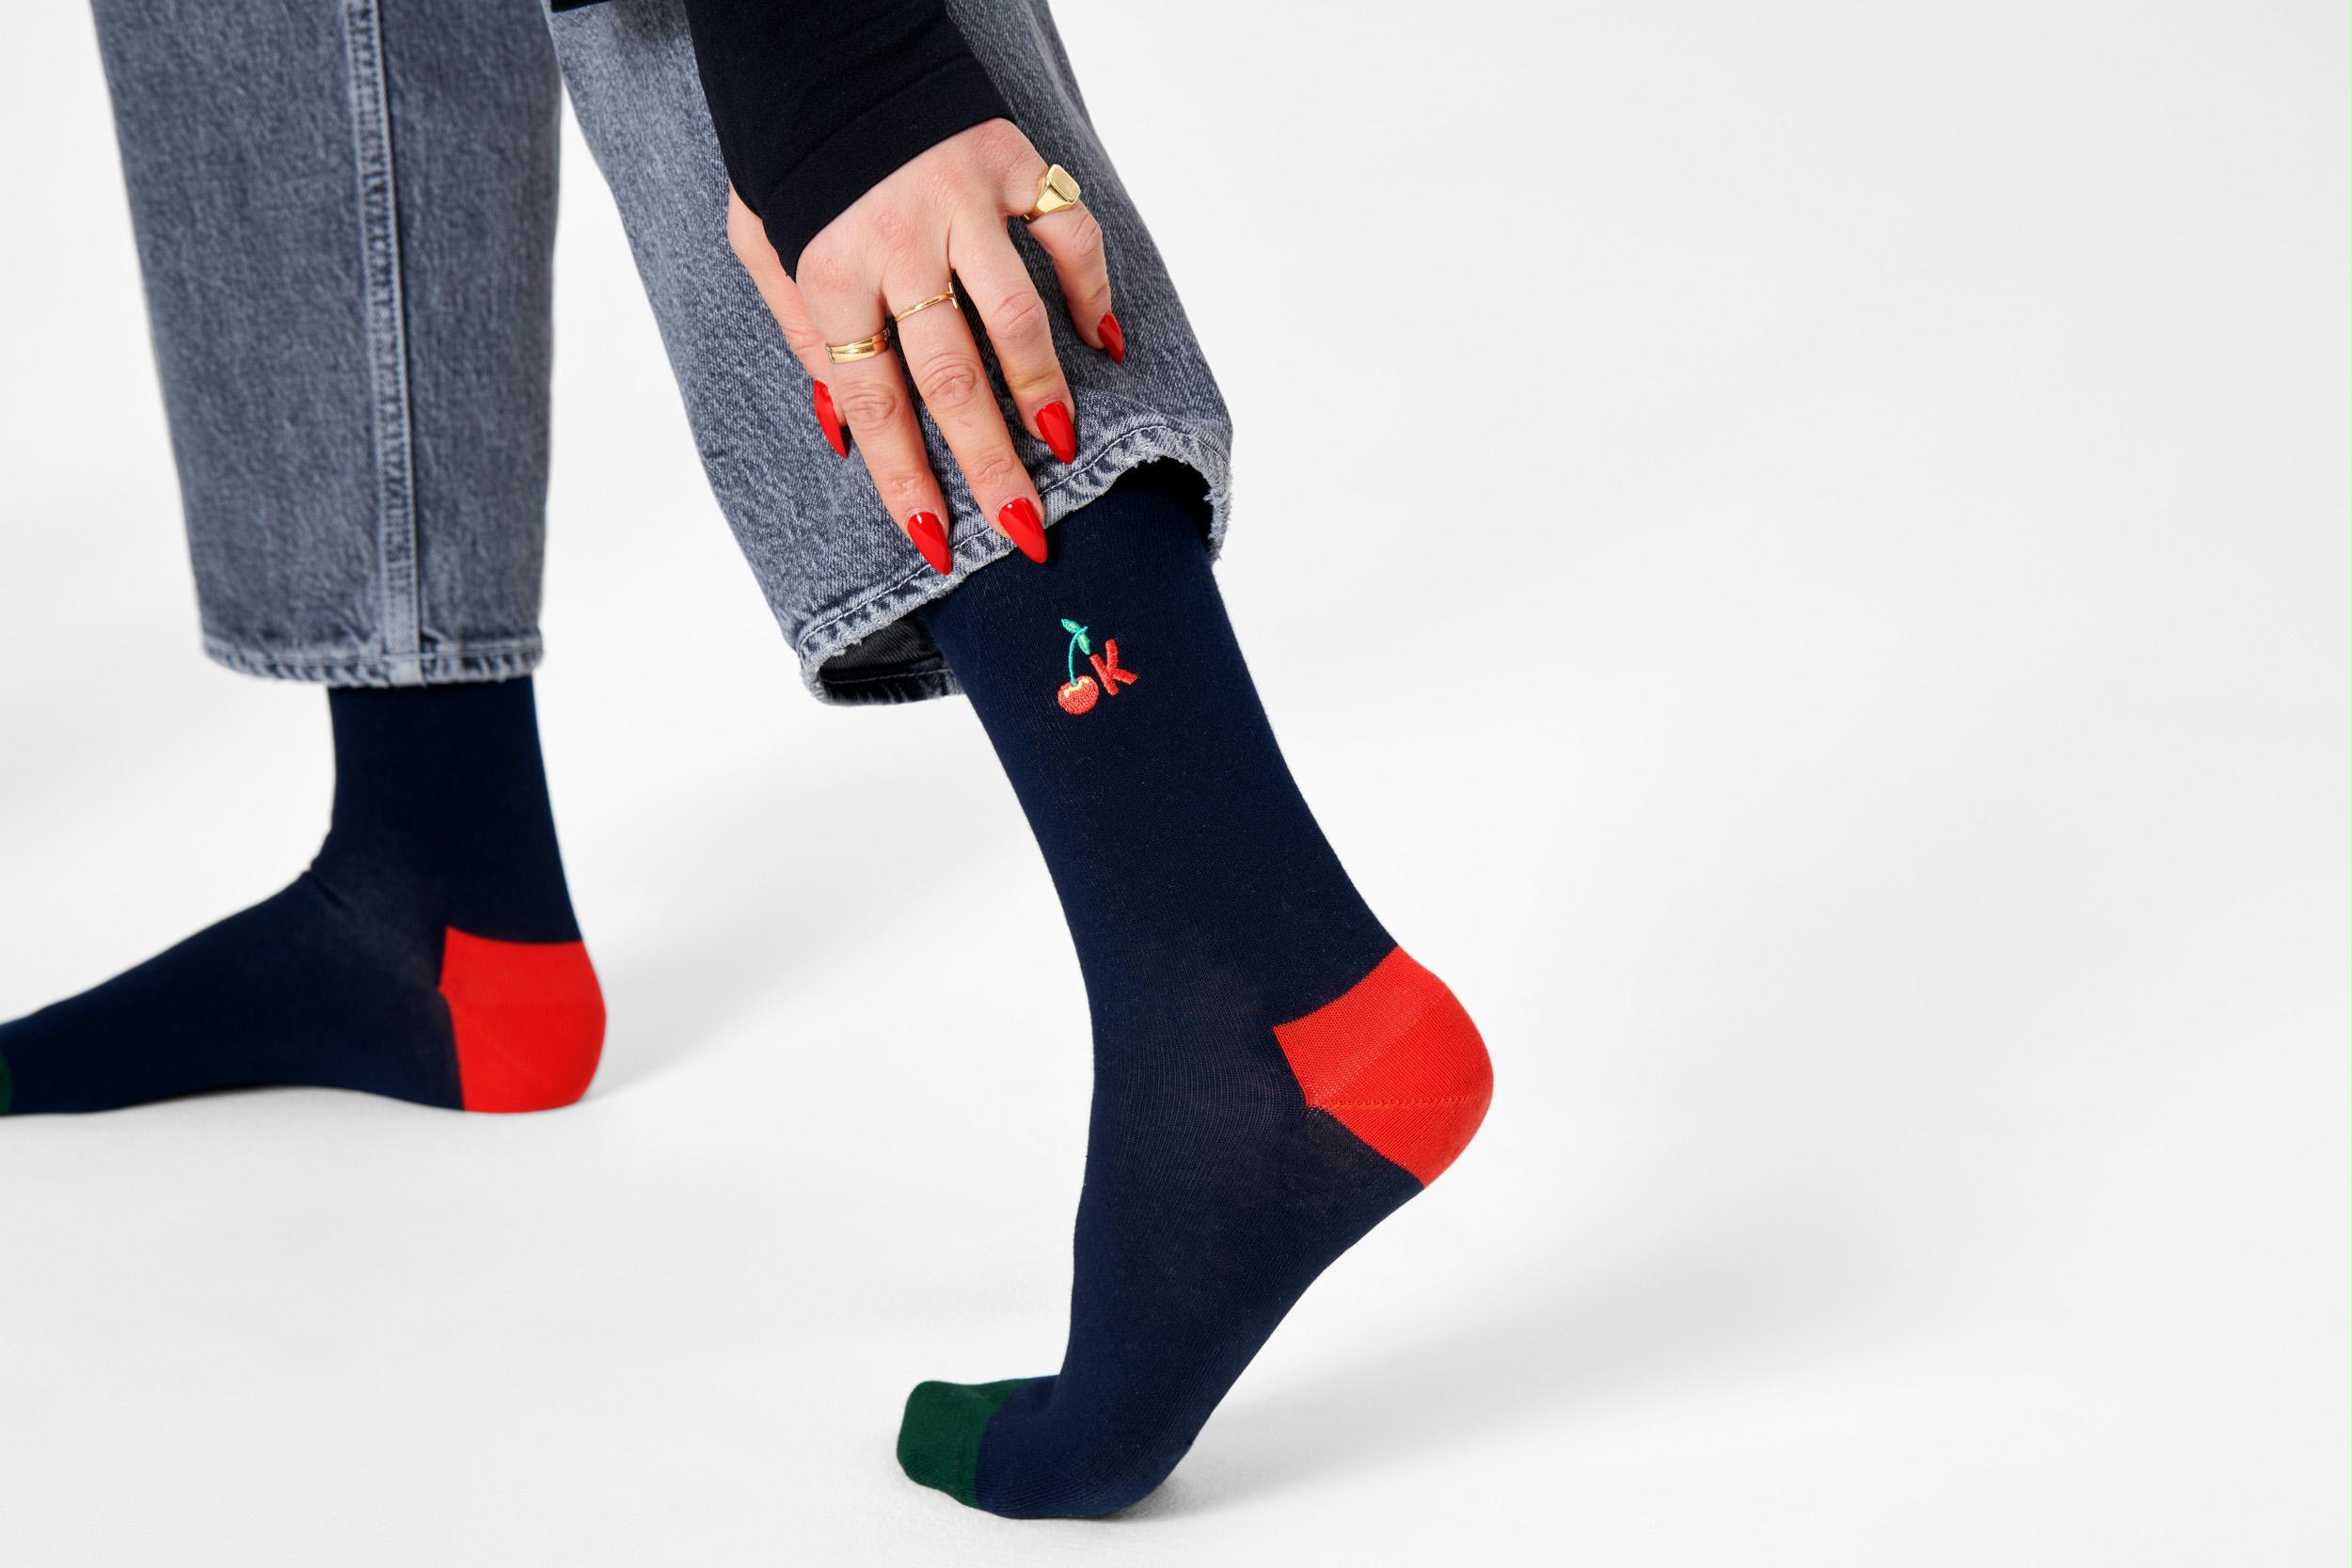 Happy Socks Sokken Blauw Embroidery Its Ok sokken BEIO01/6500